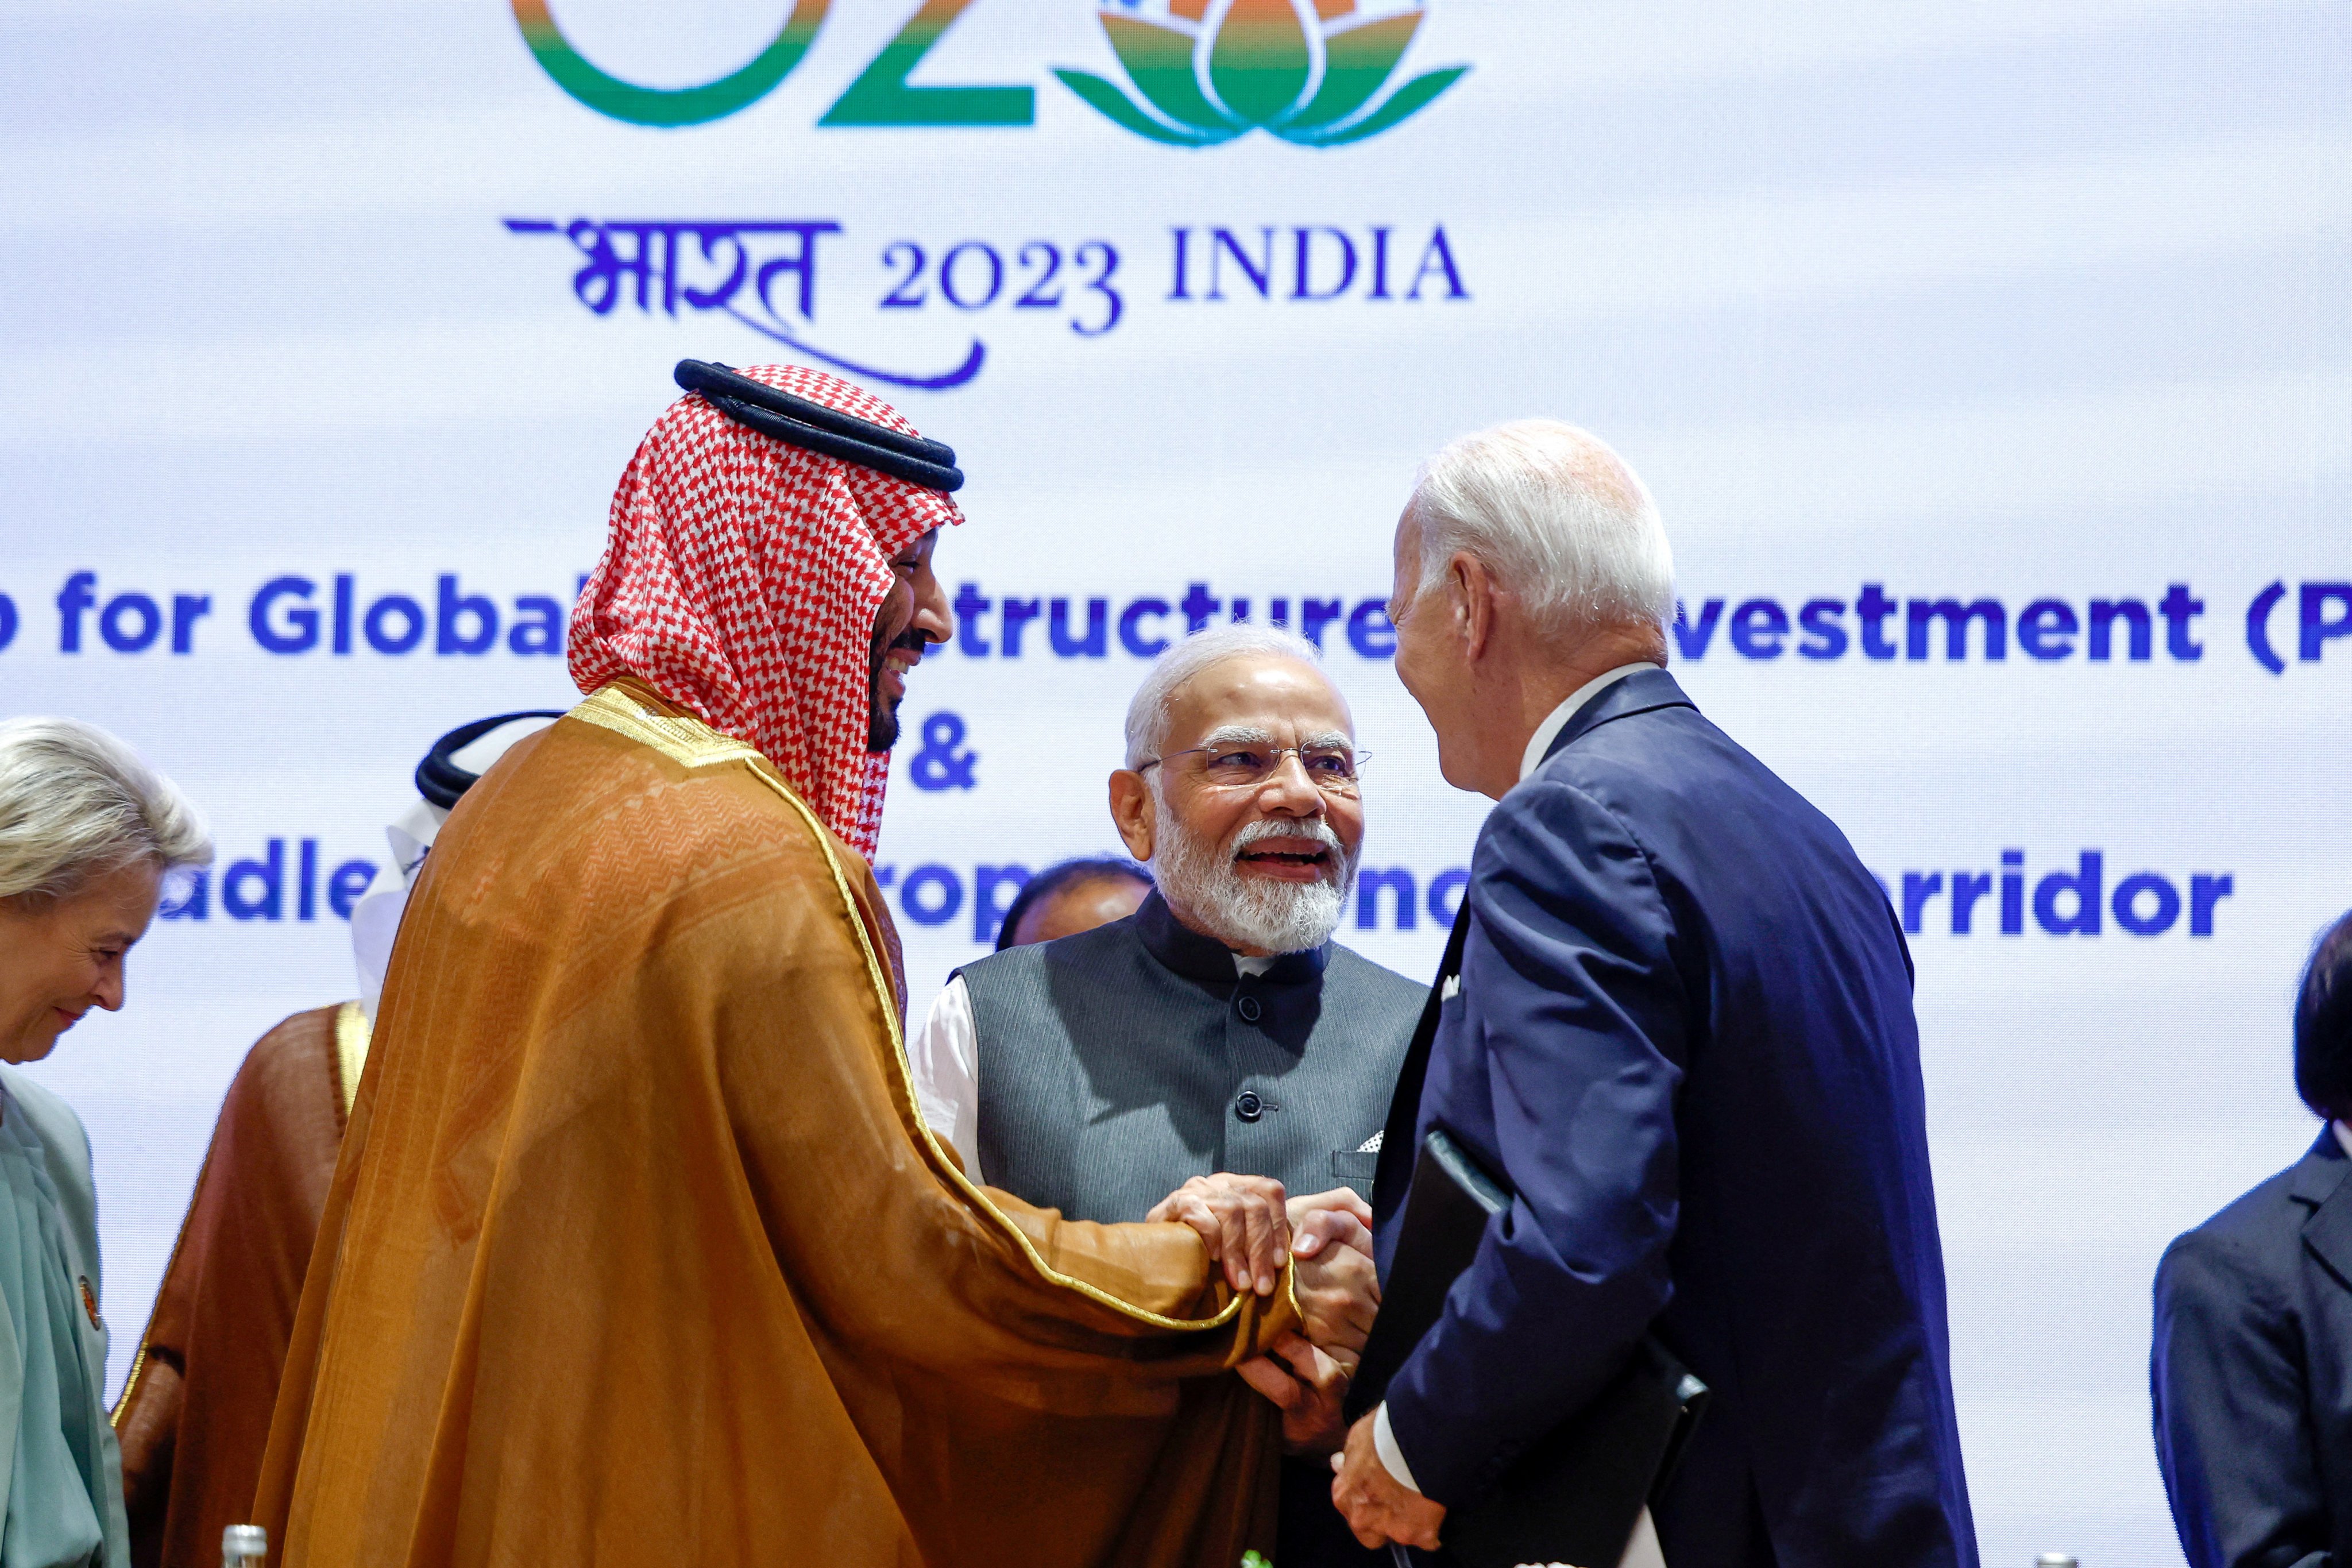 Saudi Arabian Crown Prince Mohammed bin Salman Al Saud and US President Joe Biden shake hands next to Indian Prime Minister Narendra Modi at the G20 summit in New Delhi on Saturday. Photo: Reuters